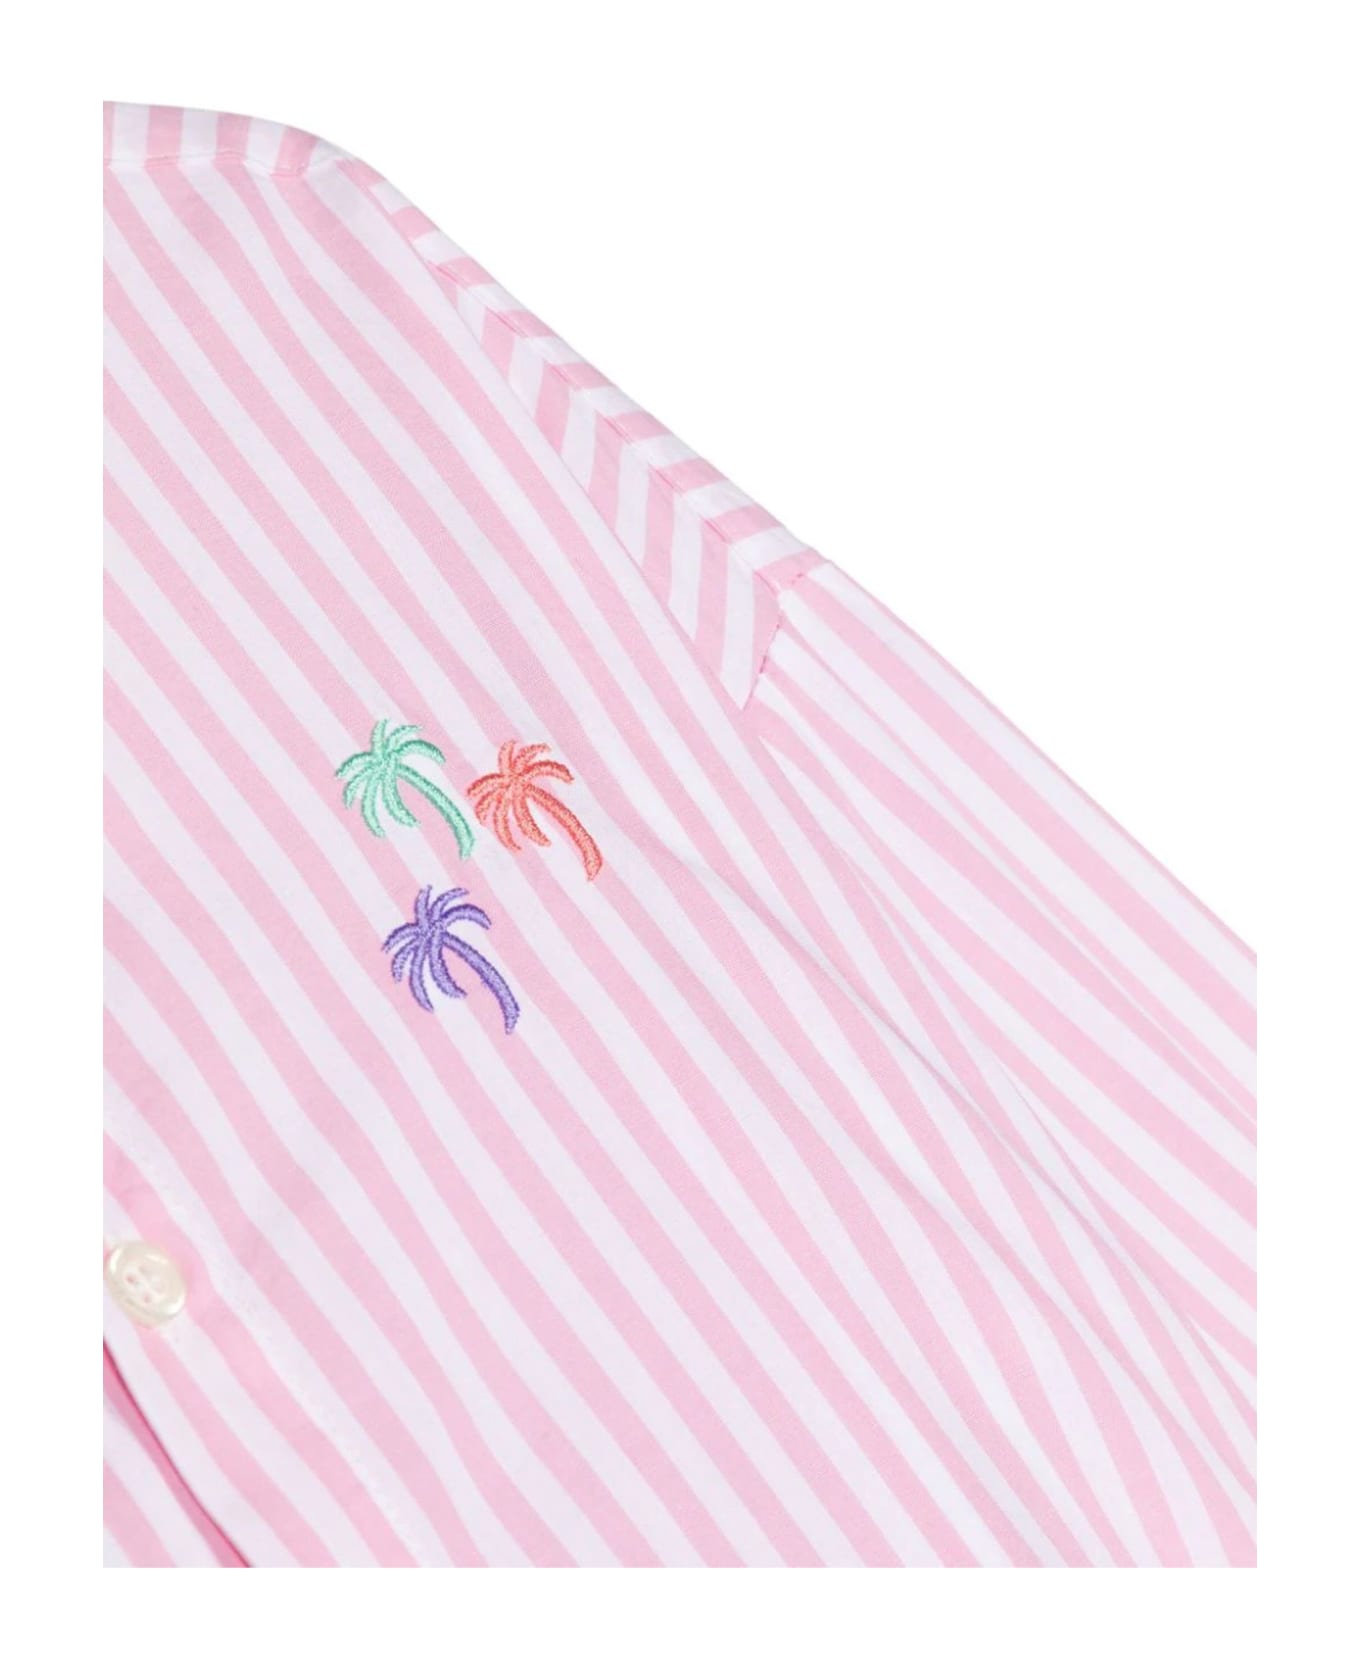 Palm Angels Shirts Pink - Pink シャツ